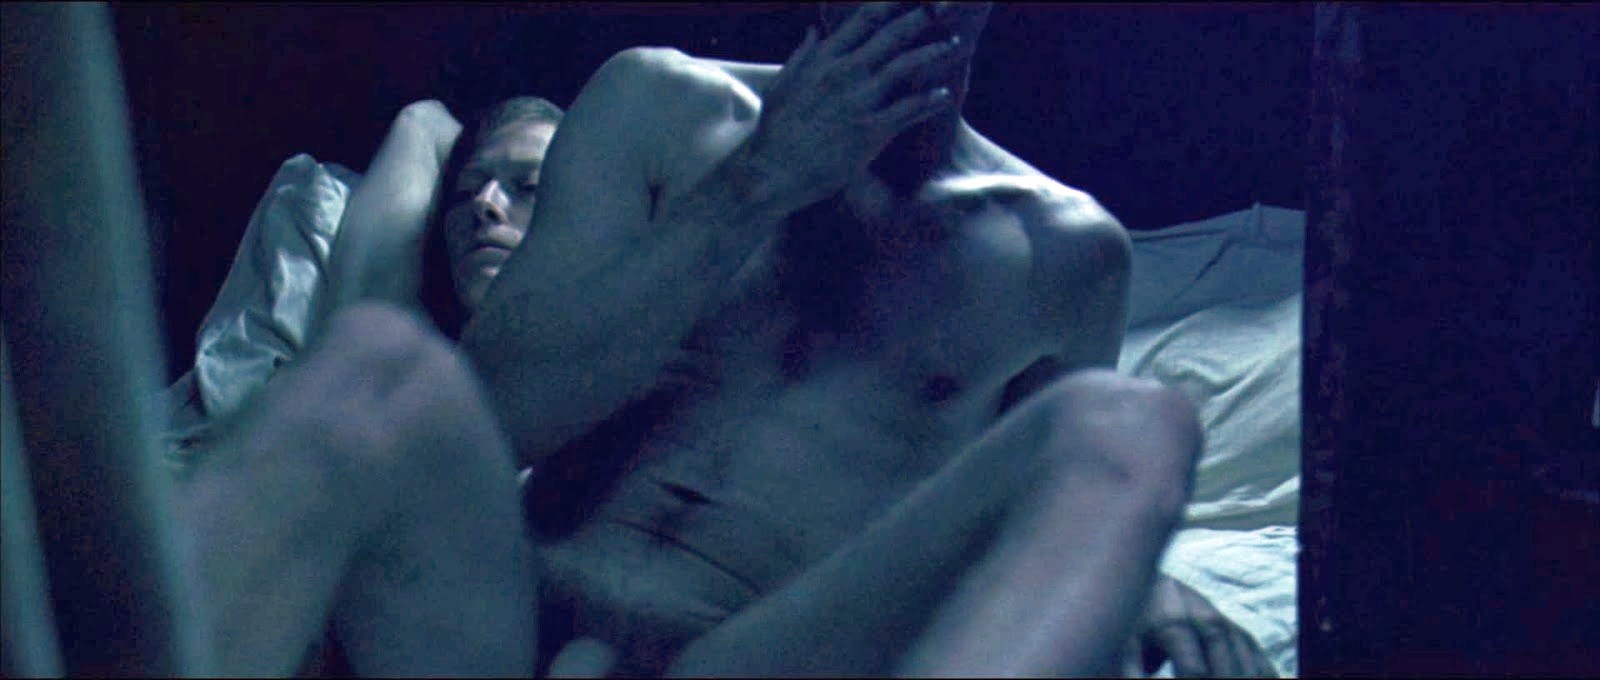 Ewan McGregor nudo in "Young Adam" (2003) - Nudi al cinema.